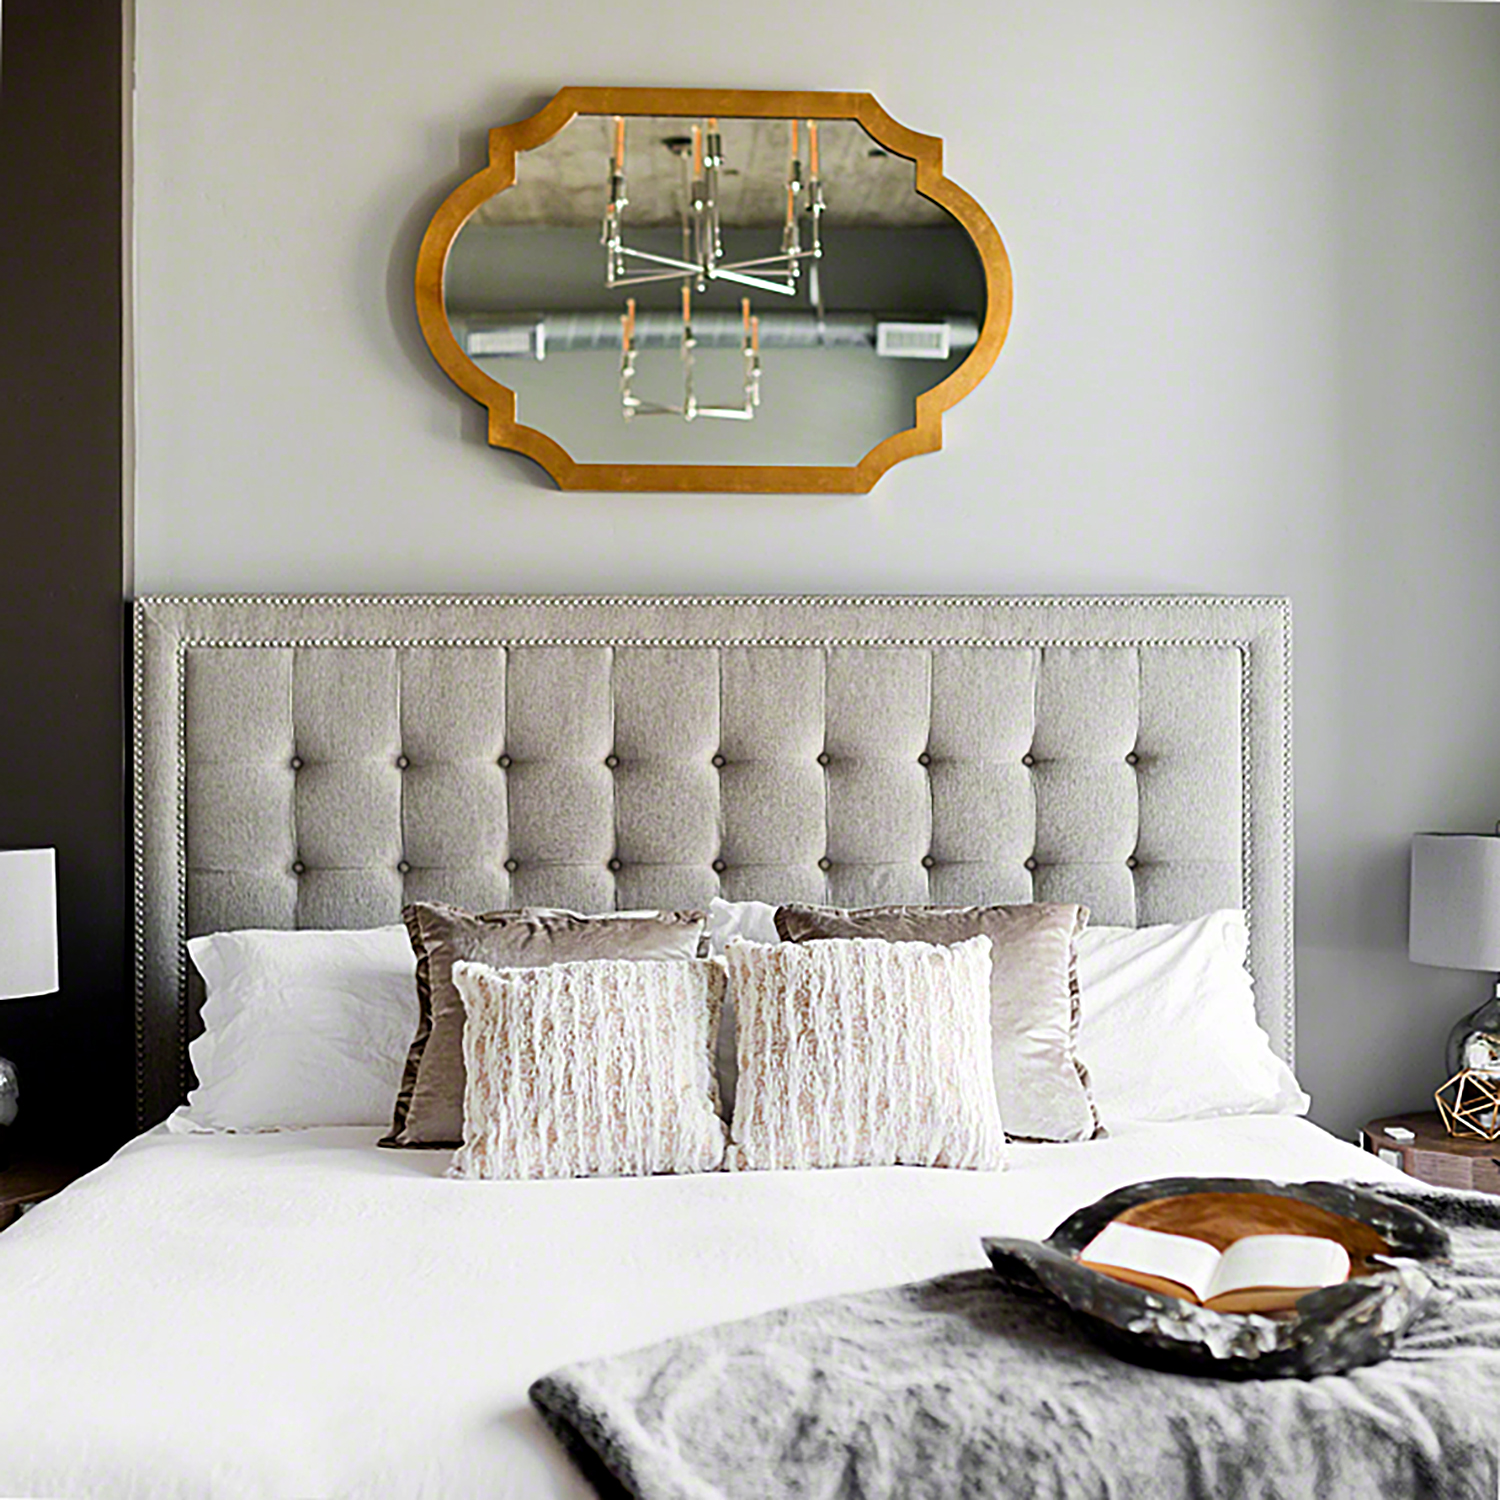 Libra bedroom interiors inspiration